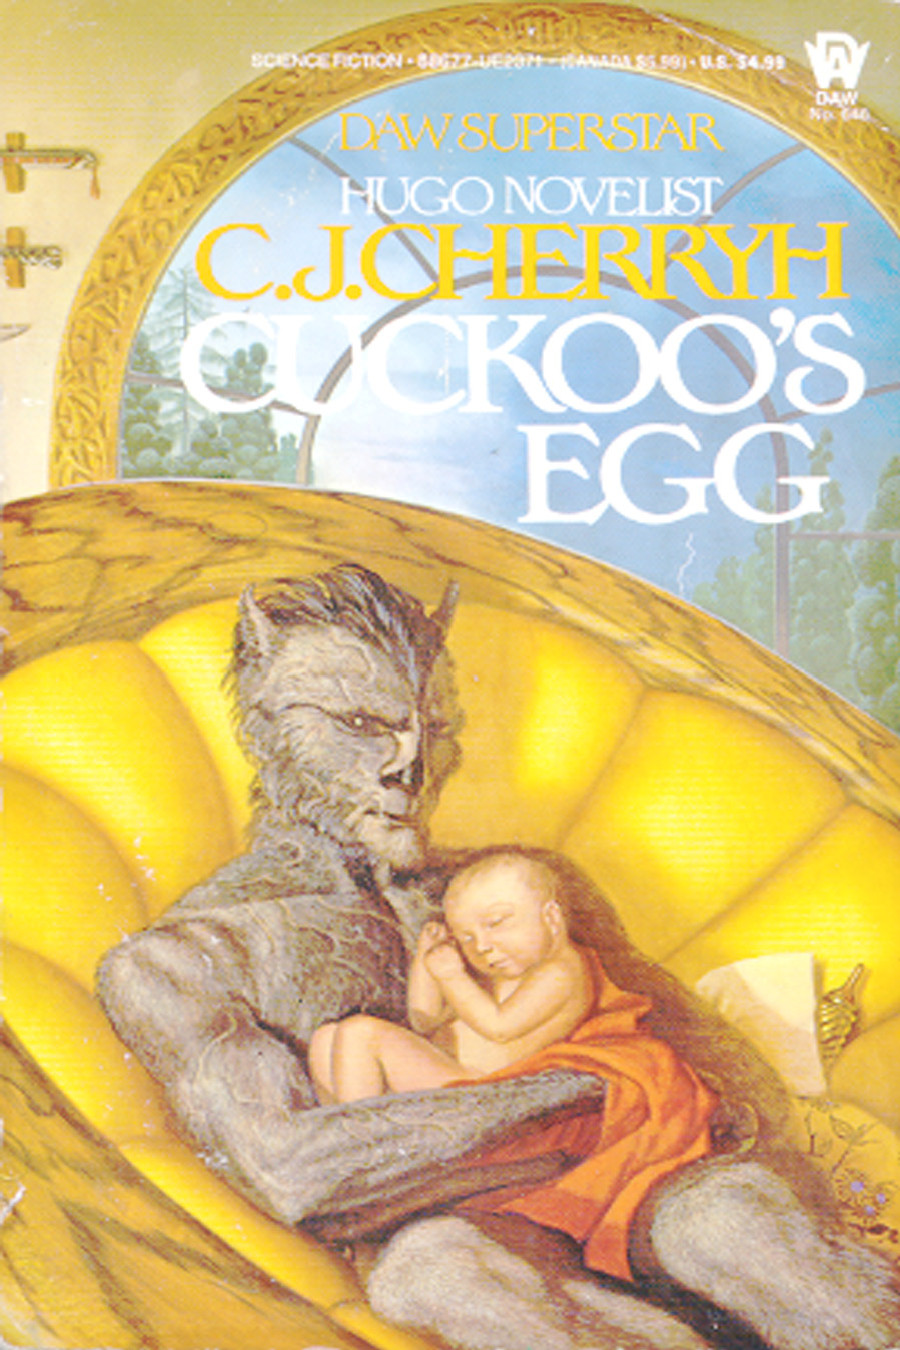 Cuckoo's Egg by C J Cherryh